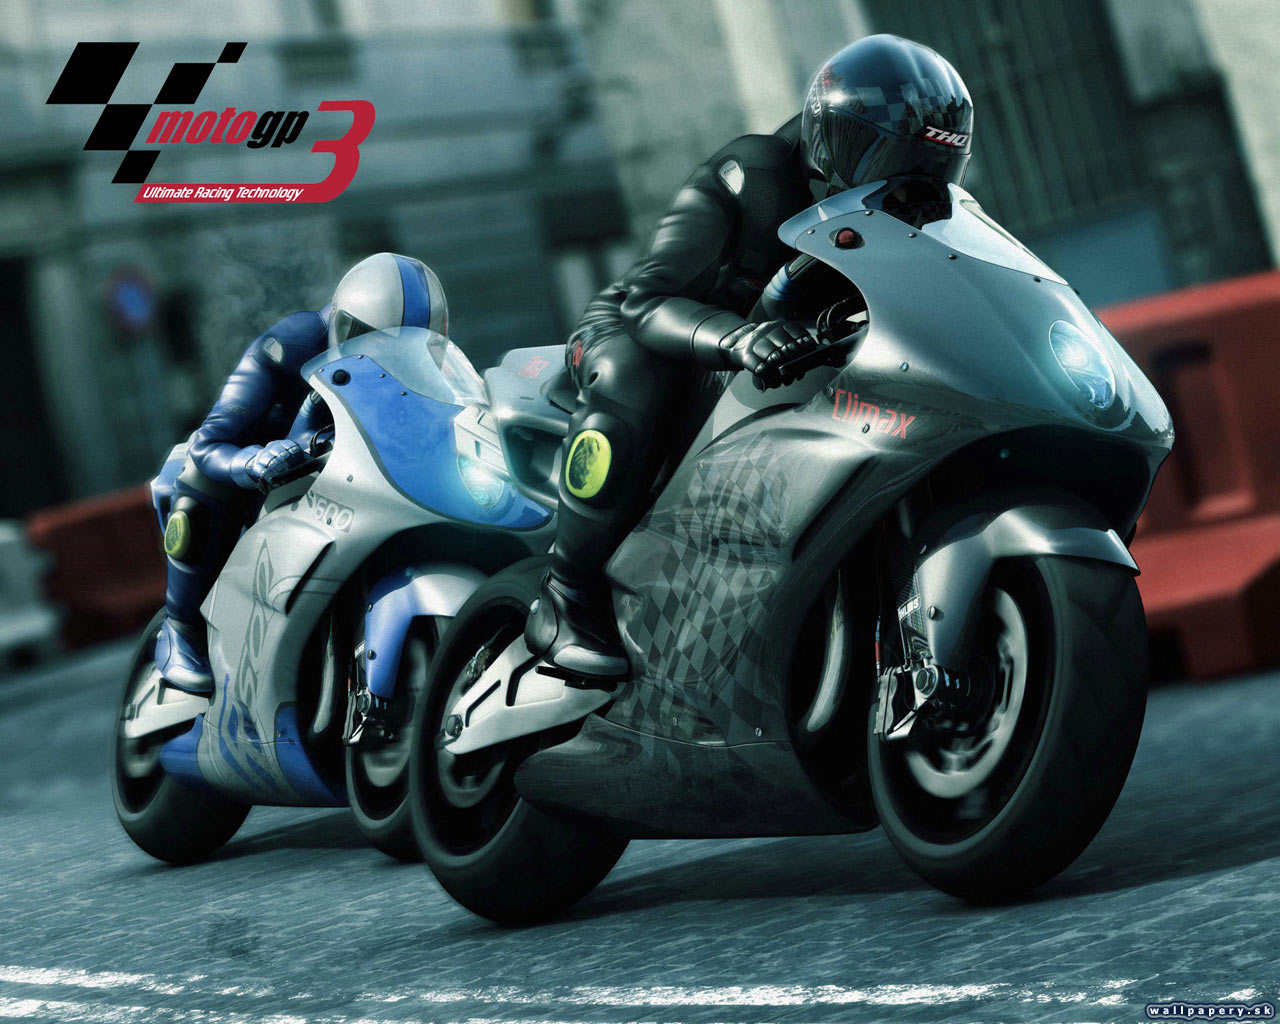 Moto GP - Ultimate Racing Technology 3 - wallpaper 4